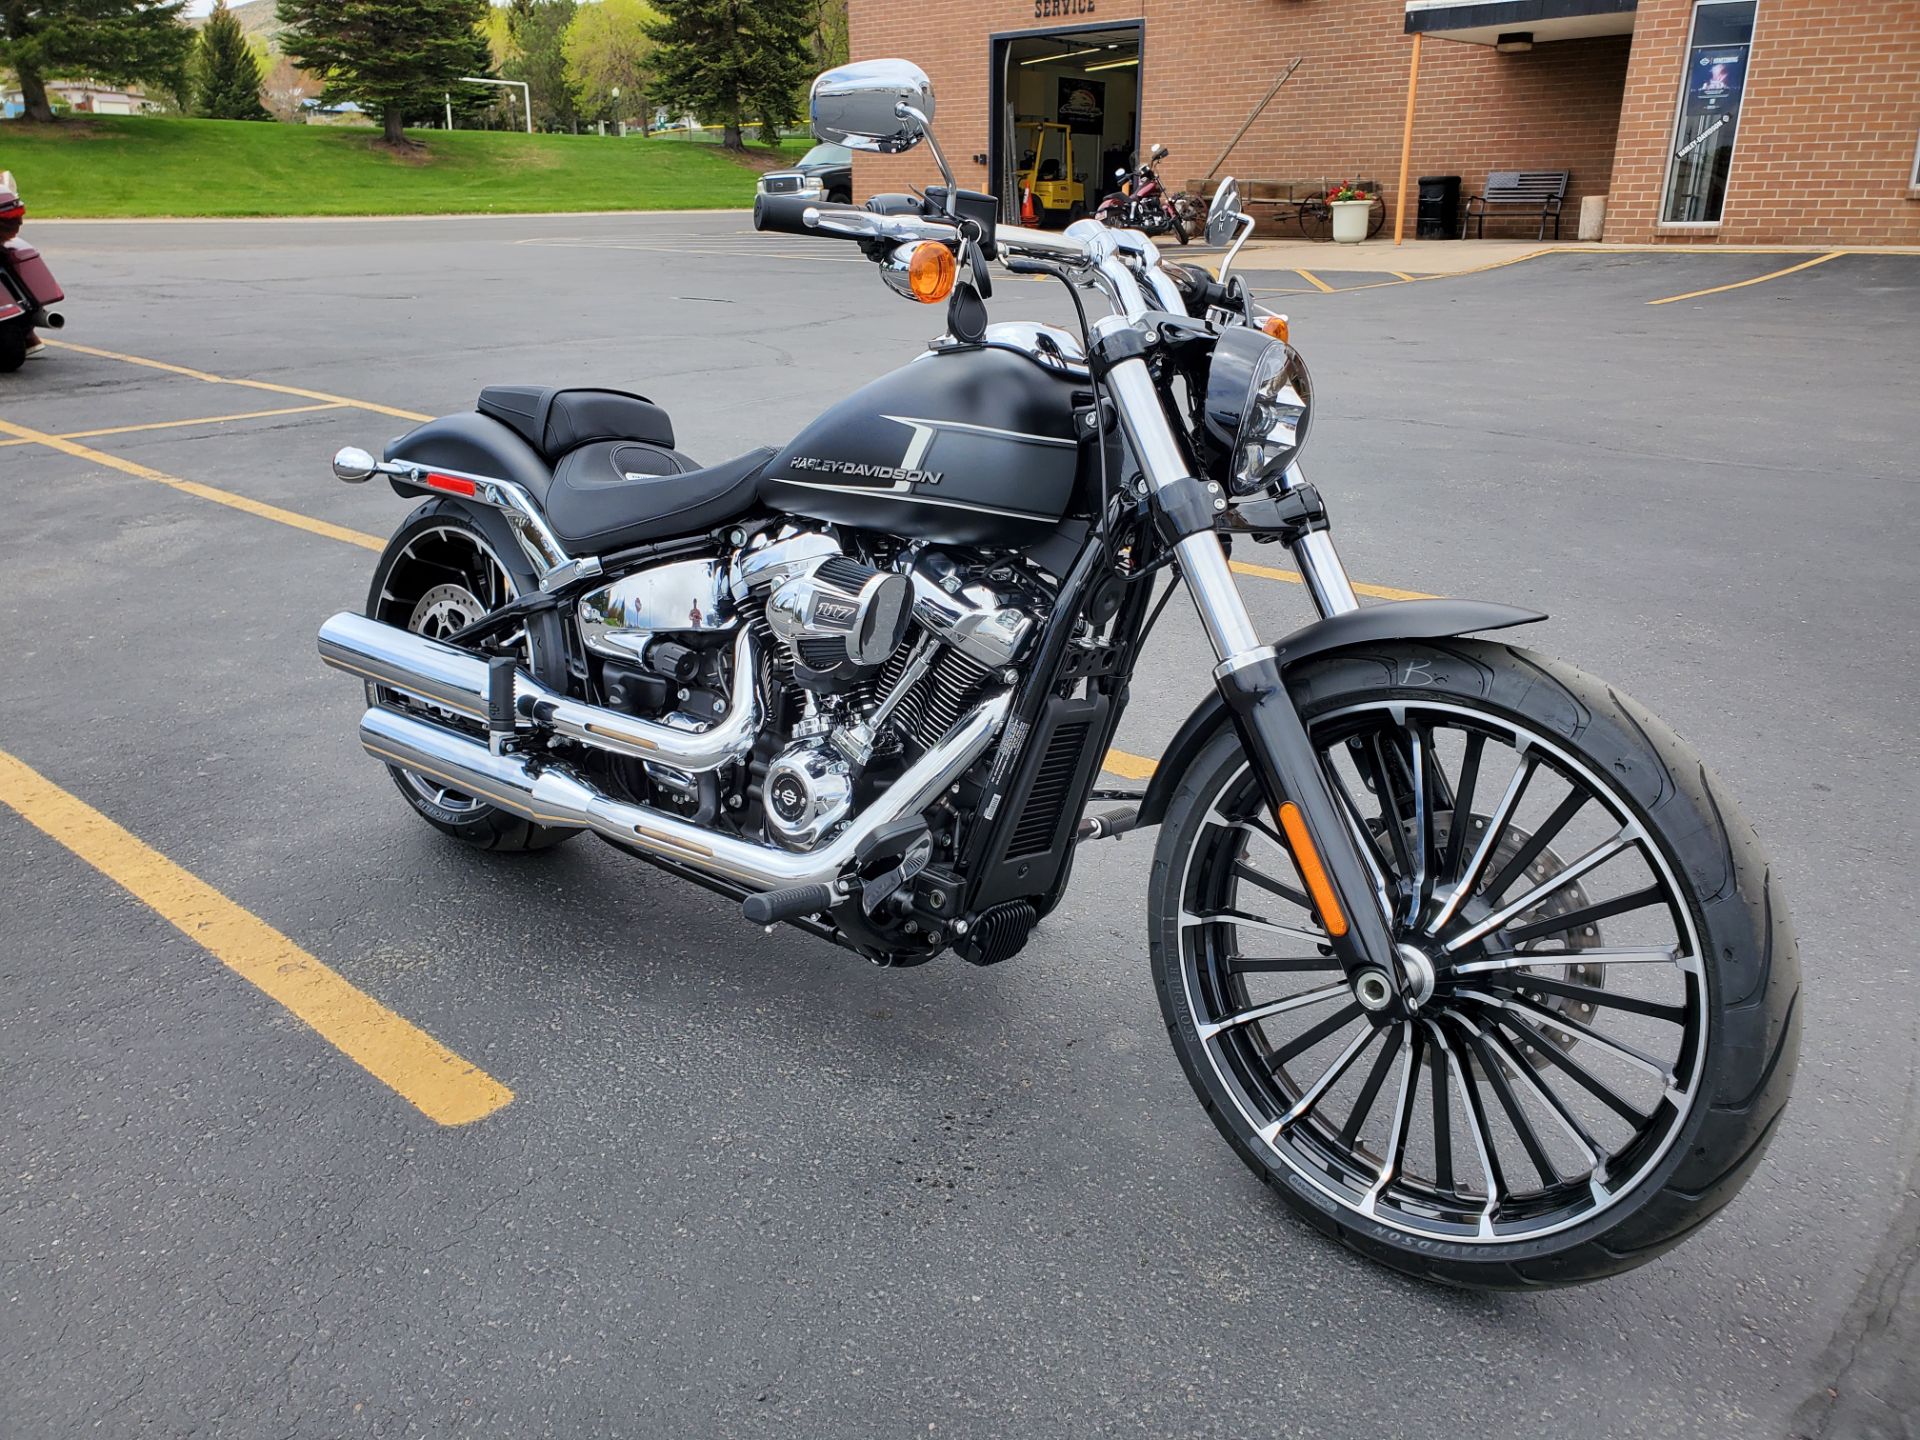 2023 Harley-Davidson Breakout® in Green River, Wyoming - Photo 8